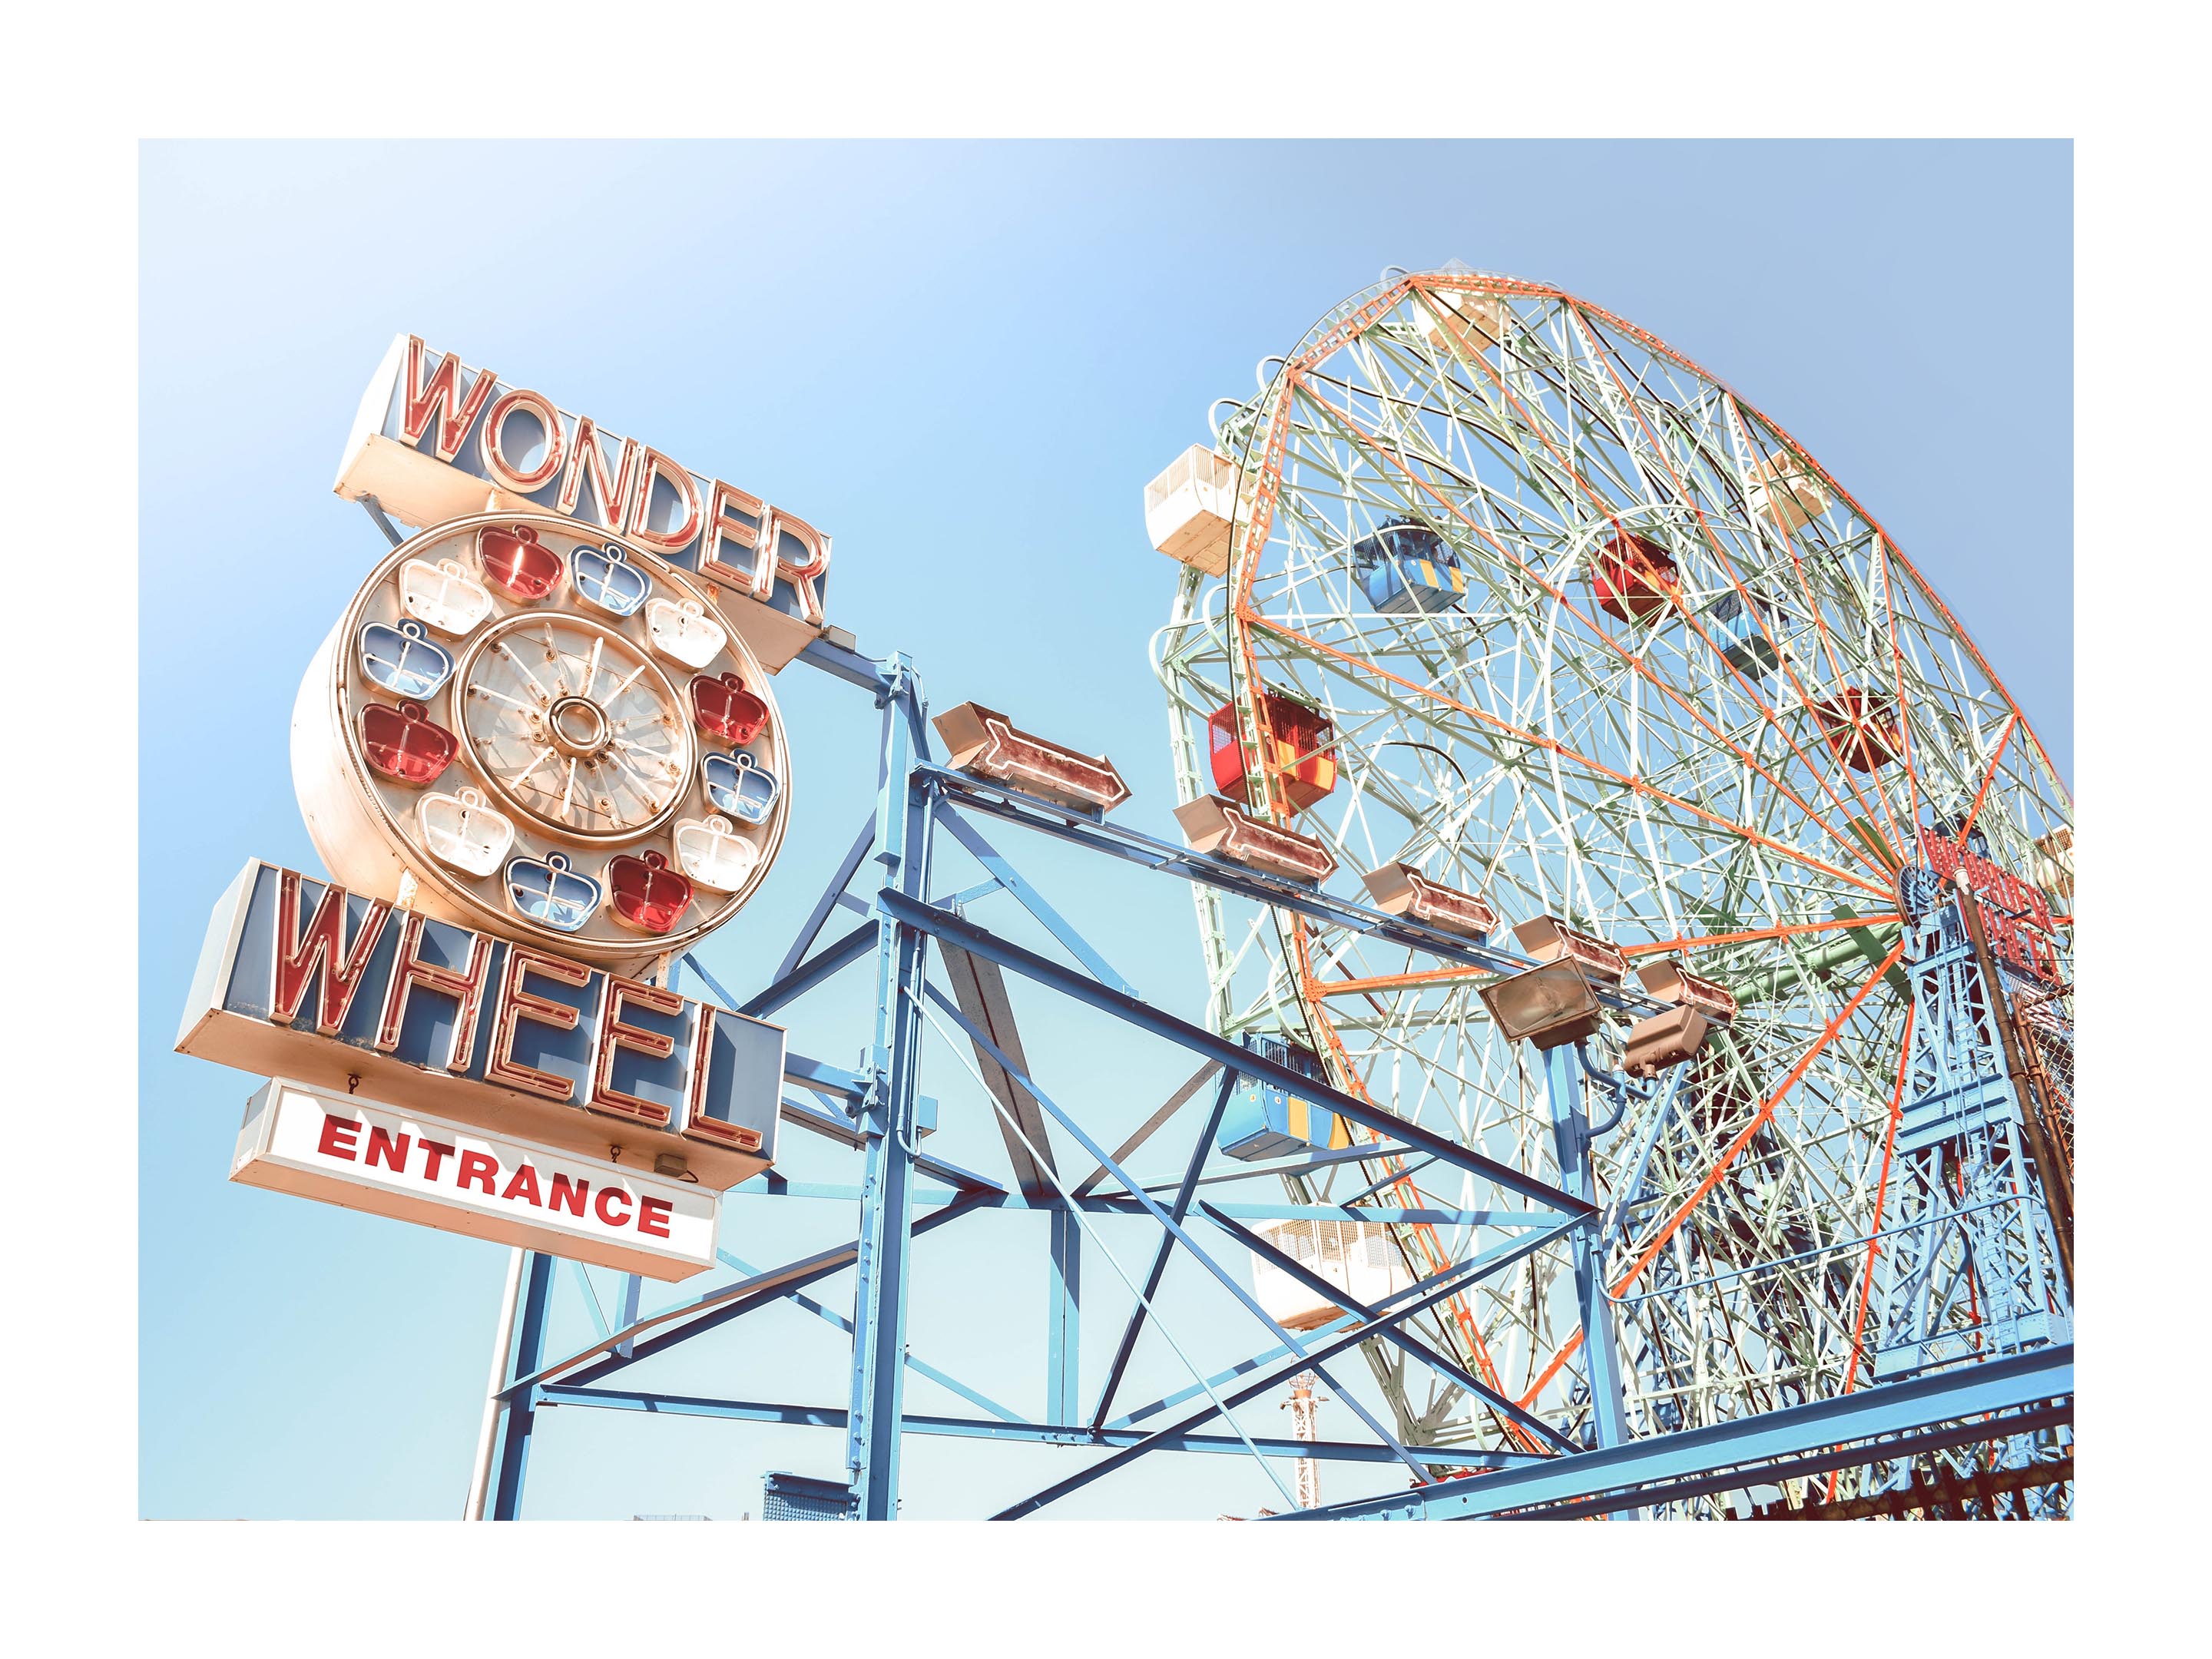 Wonder Wheel - Coney Island